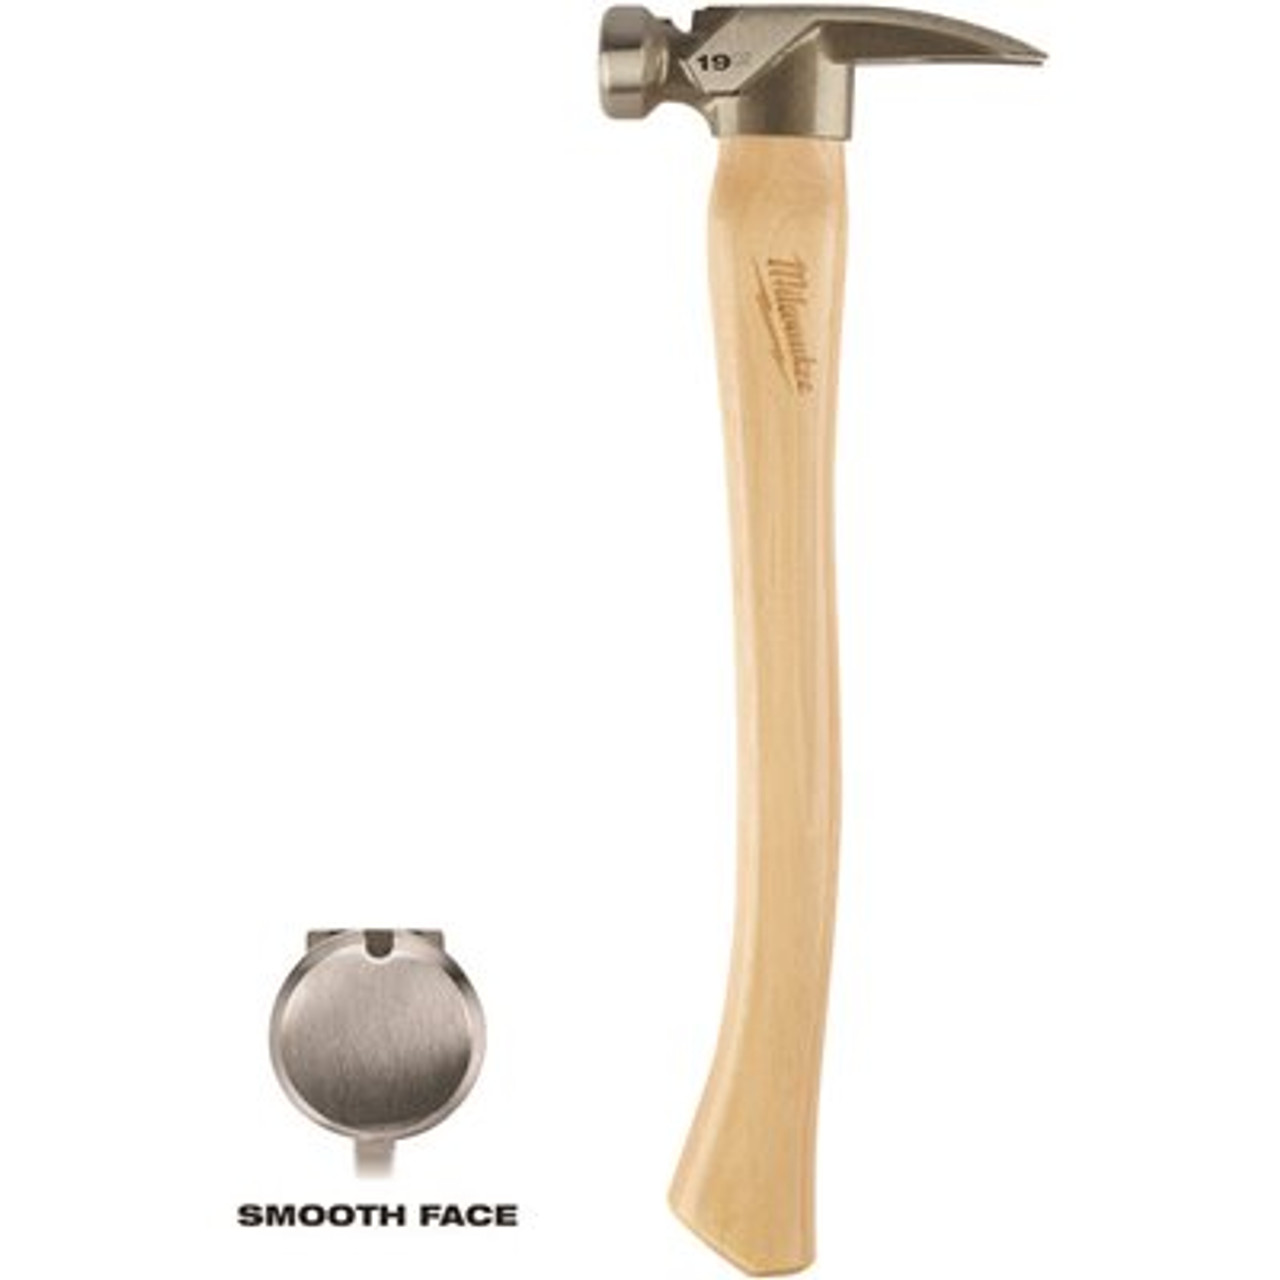 Milwaukee 19 oz. Smooth Face Hickory Wood Framing Hammer